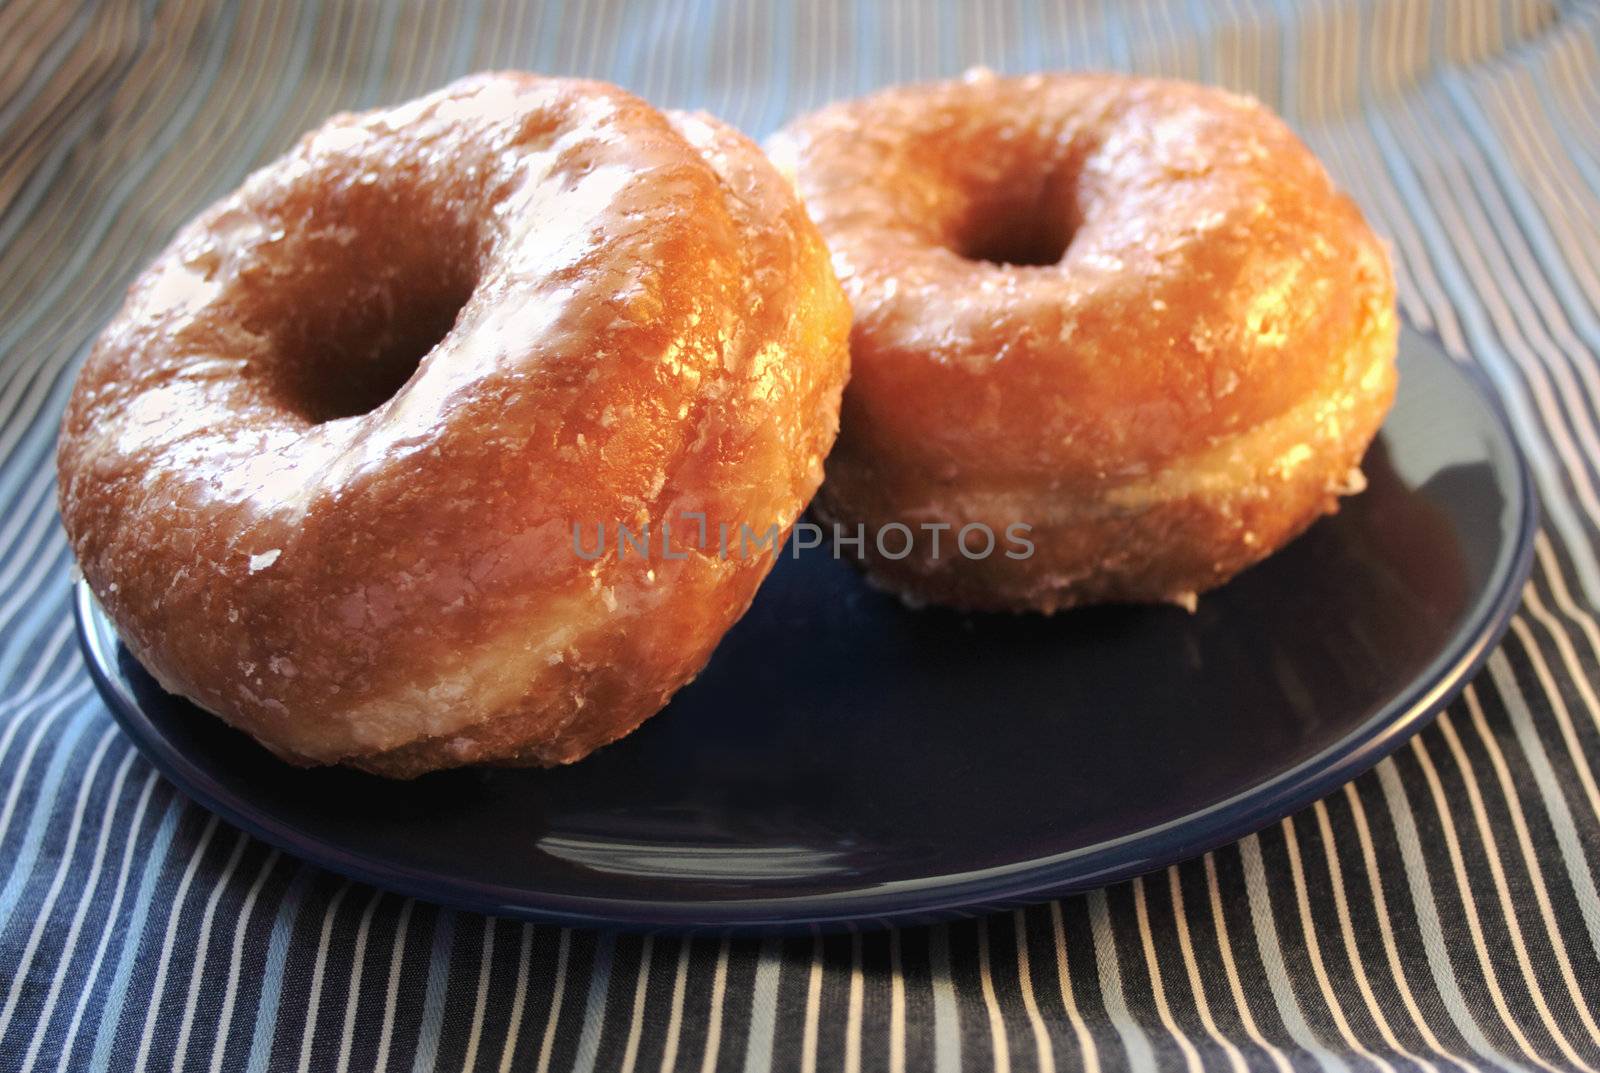 two glazed doughnuts by nebari